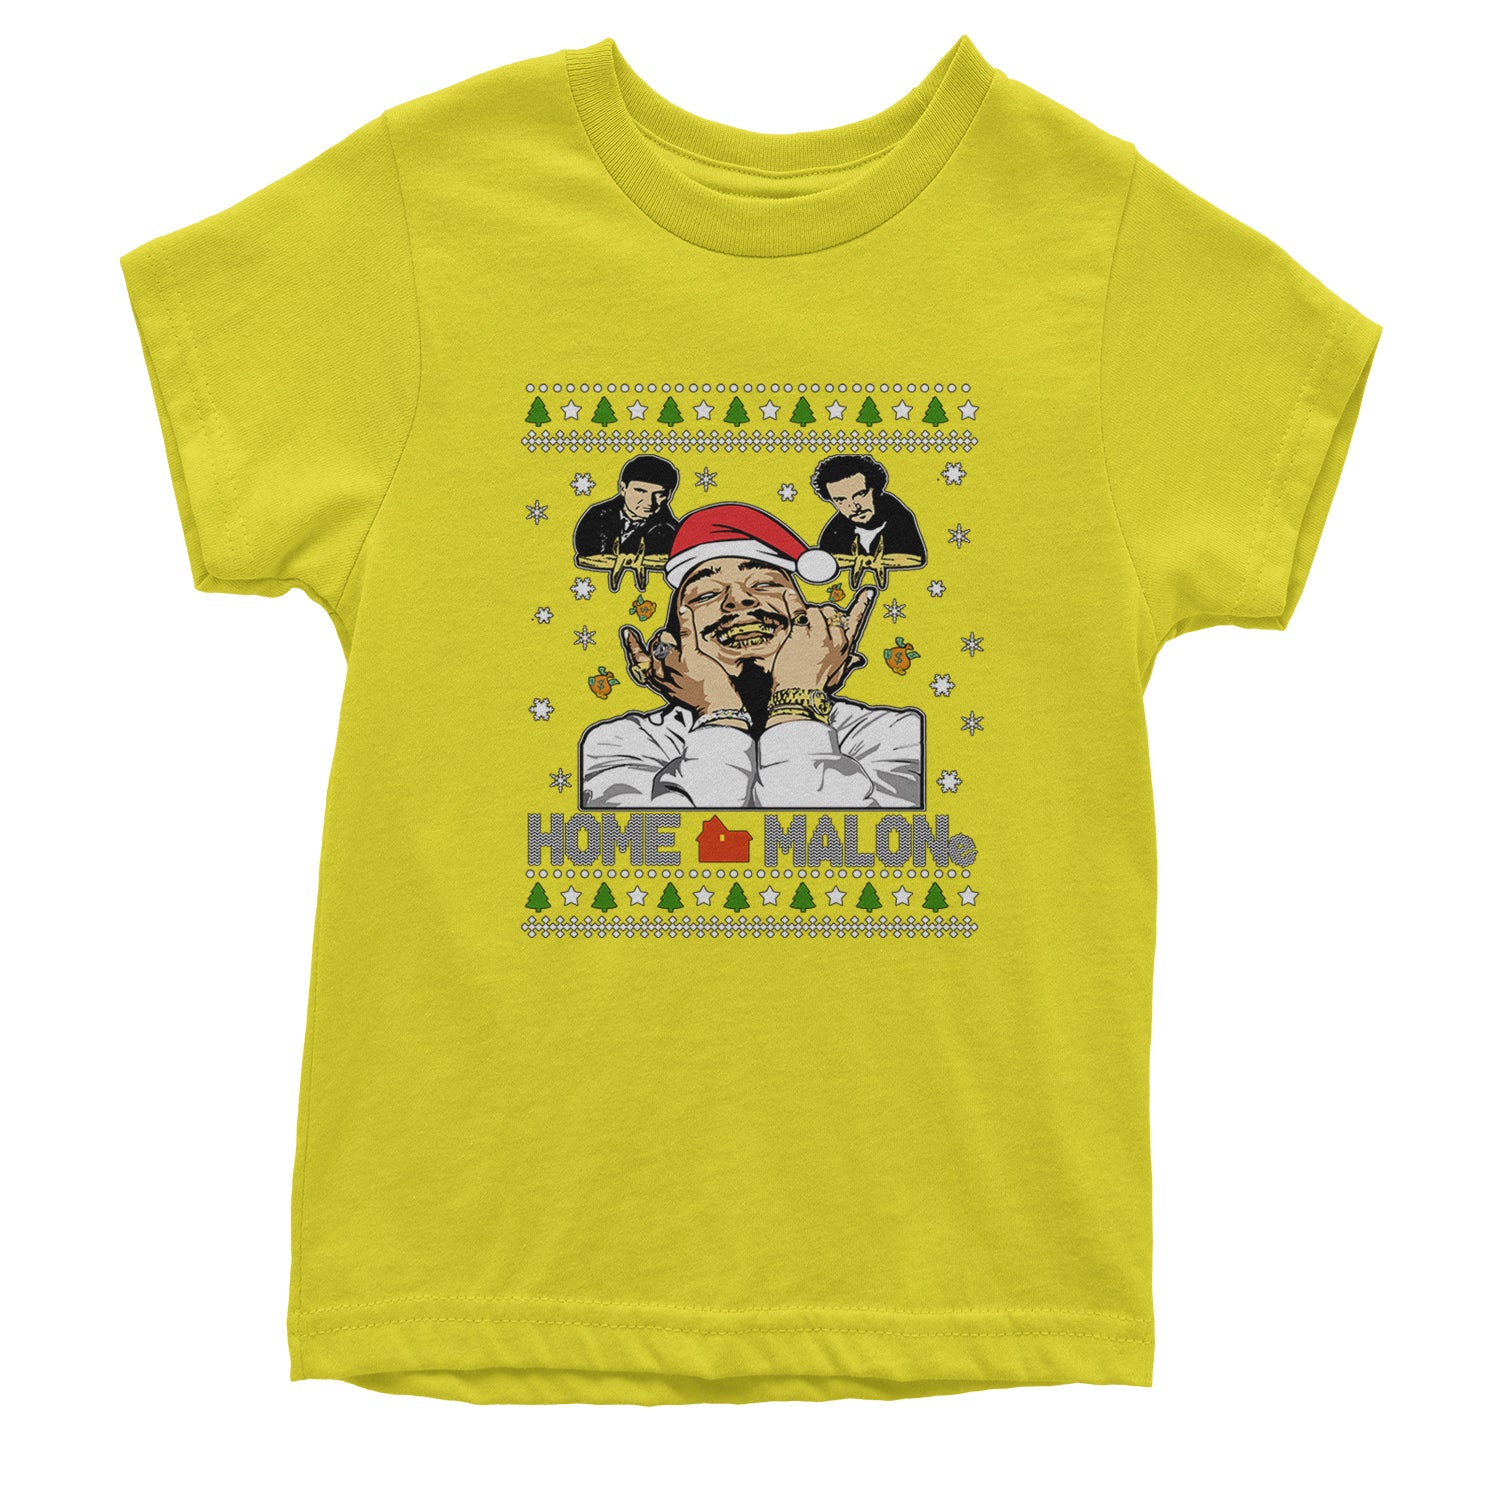 Home Malone Ugly Christmas Youth T-shirt alone, caulkin, home, malone, mcauley, post by Expression Tees